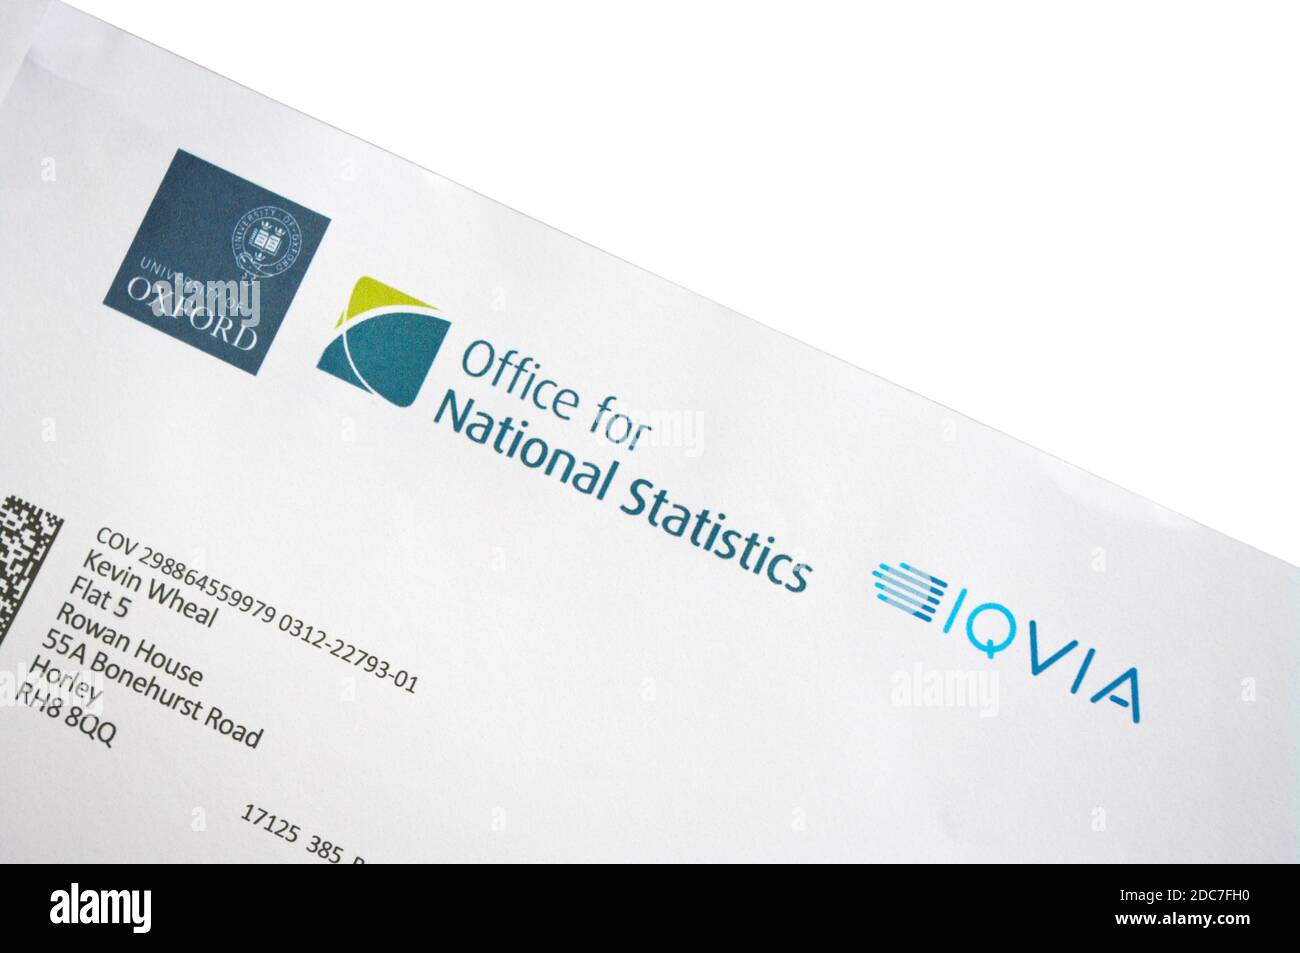 Office For National Statistics Letter and Logo On Letterhead Stock Photo